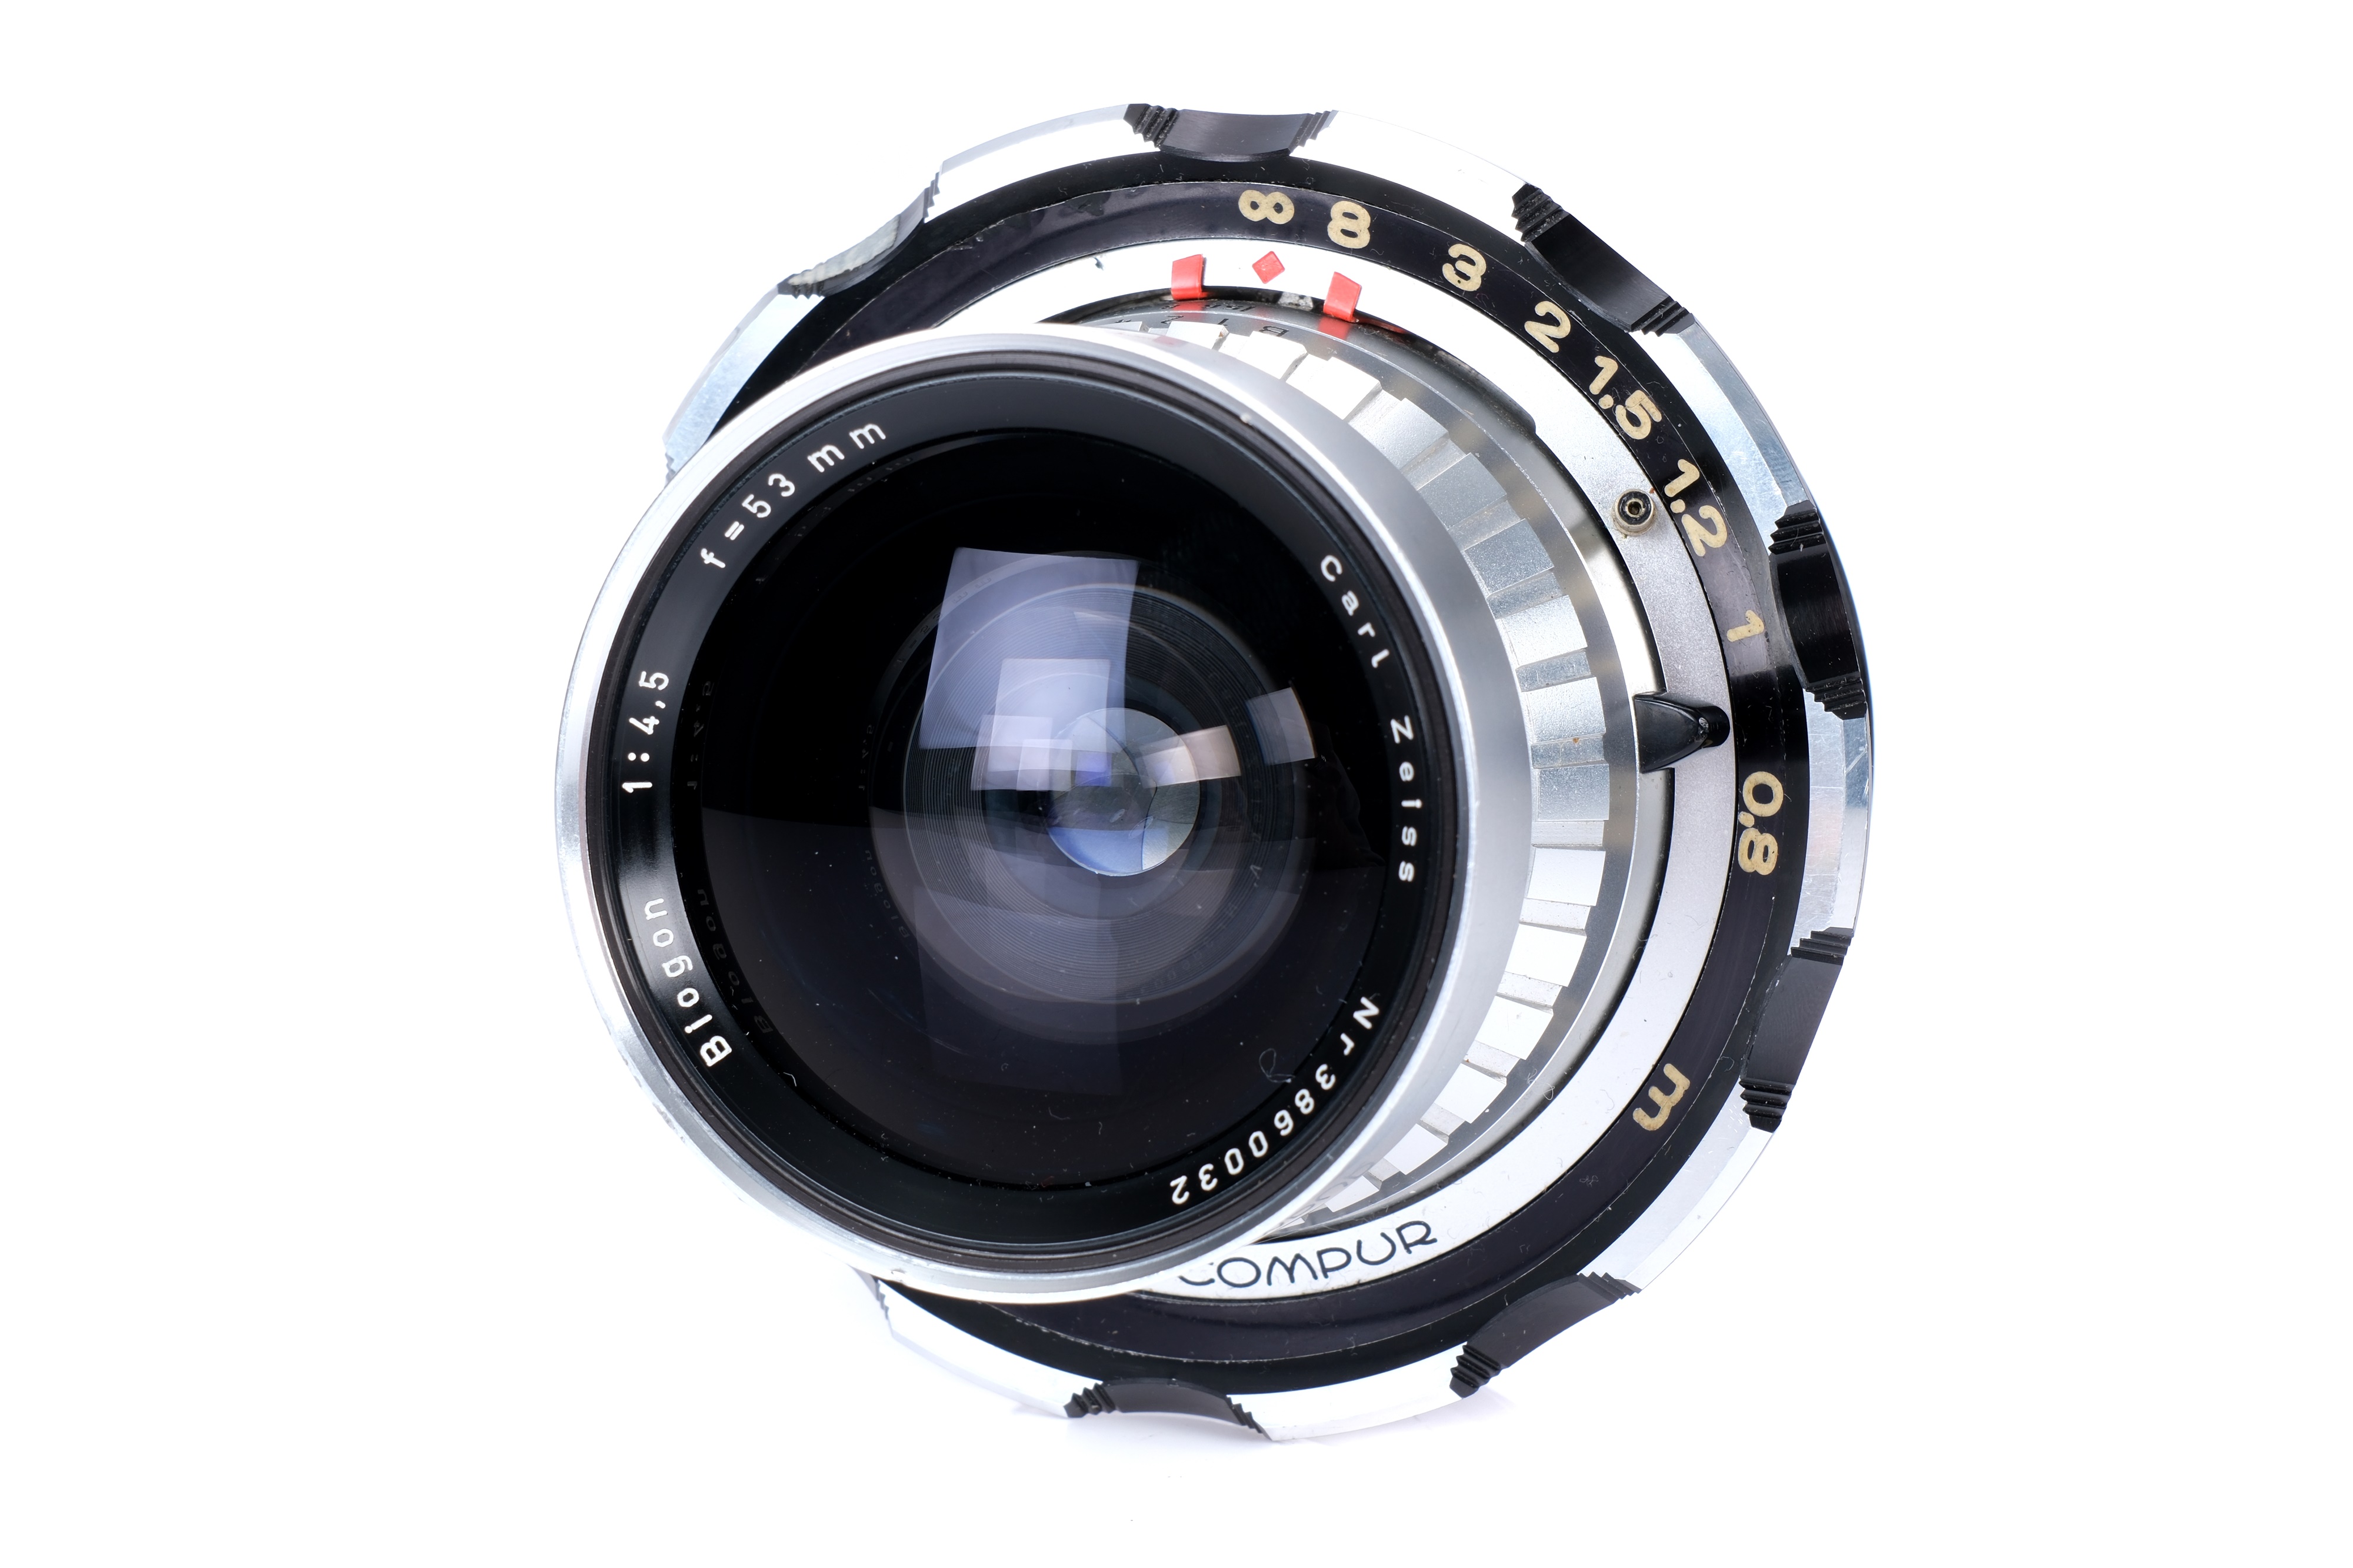 A Linhof Press 70 Medium Format Rangefinder Camera, - Image 3 of 4